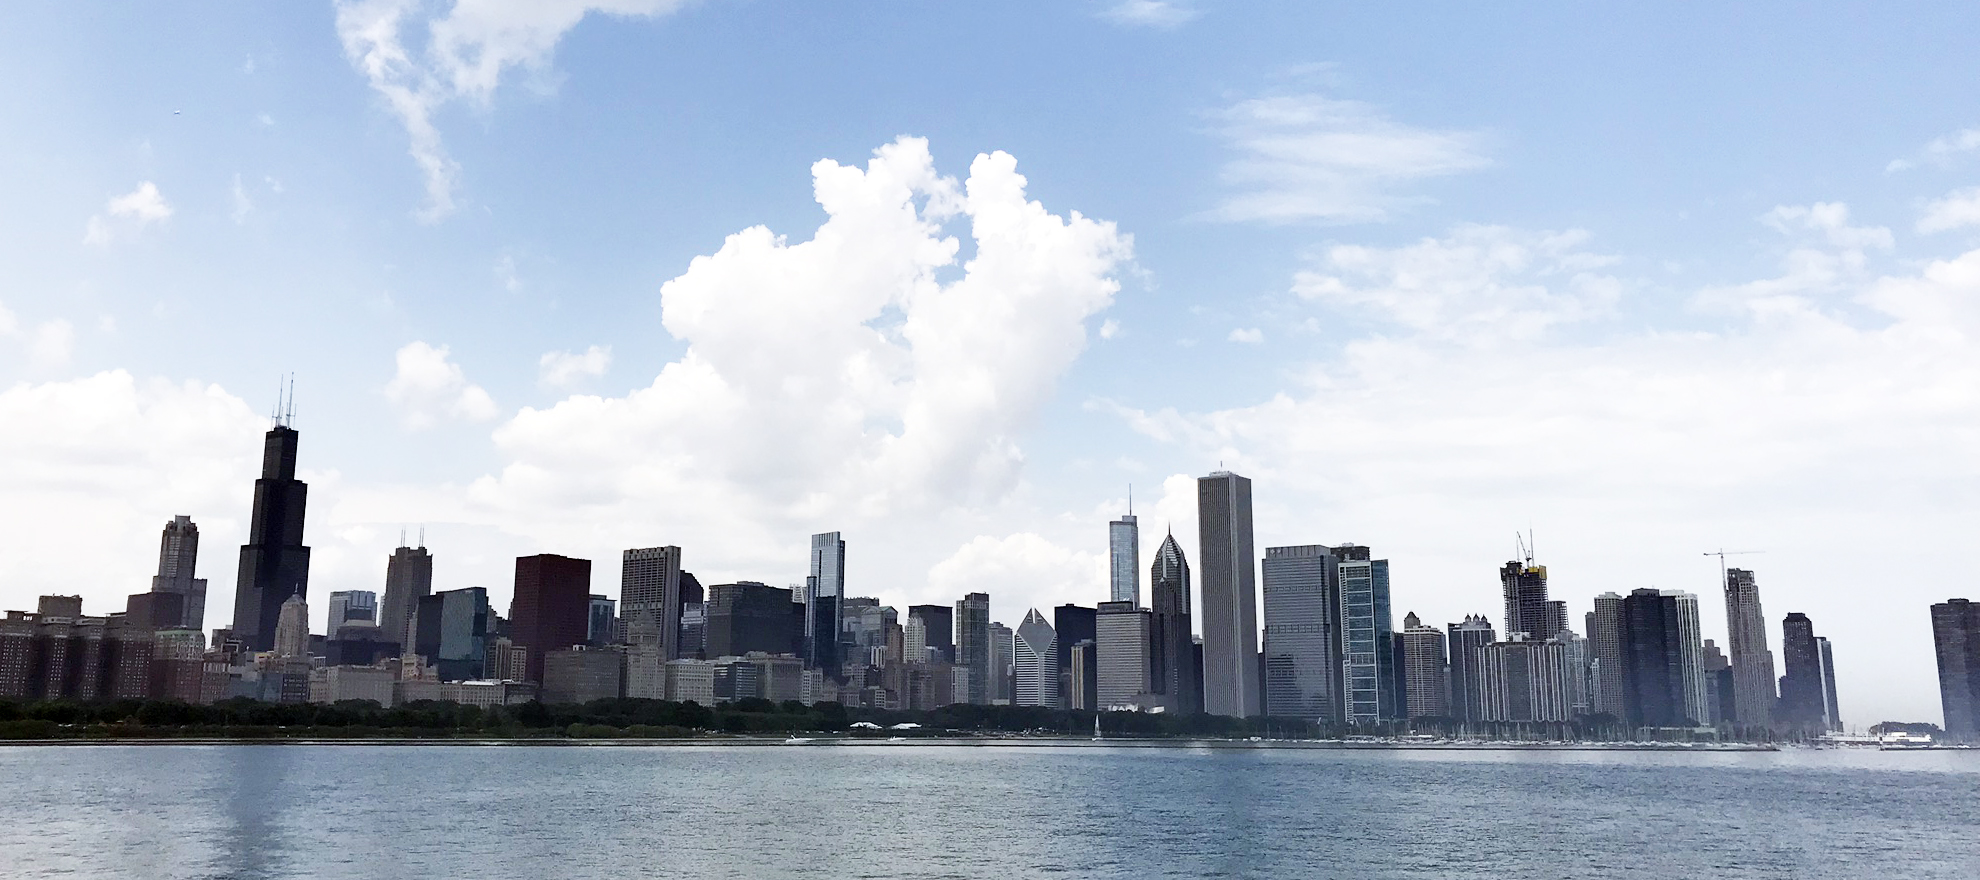 Skyline of Chicago Illinois